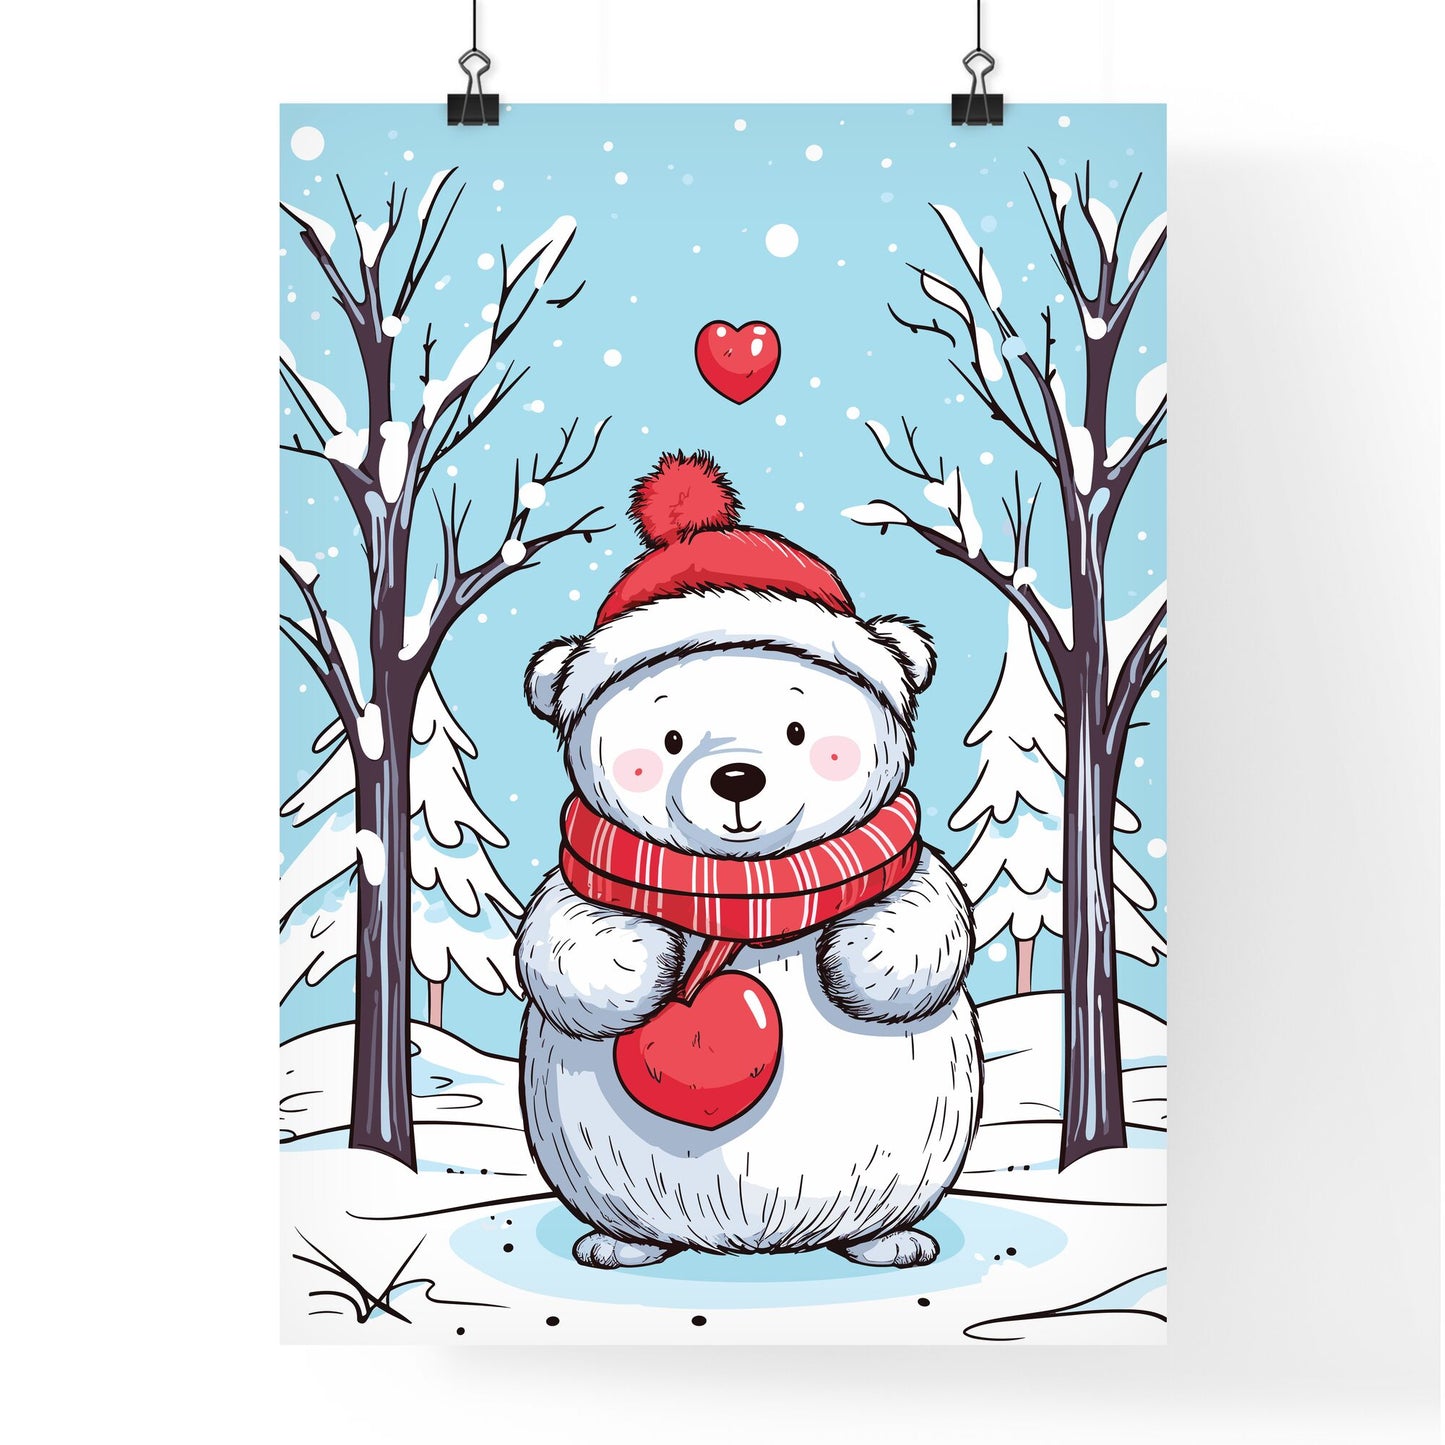 Merry Christmas Card With A Cute Bear Huging A Heart - A Cartoon Of A Polar Bear Holding A Heart Default Title